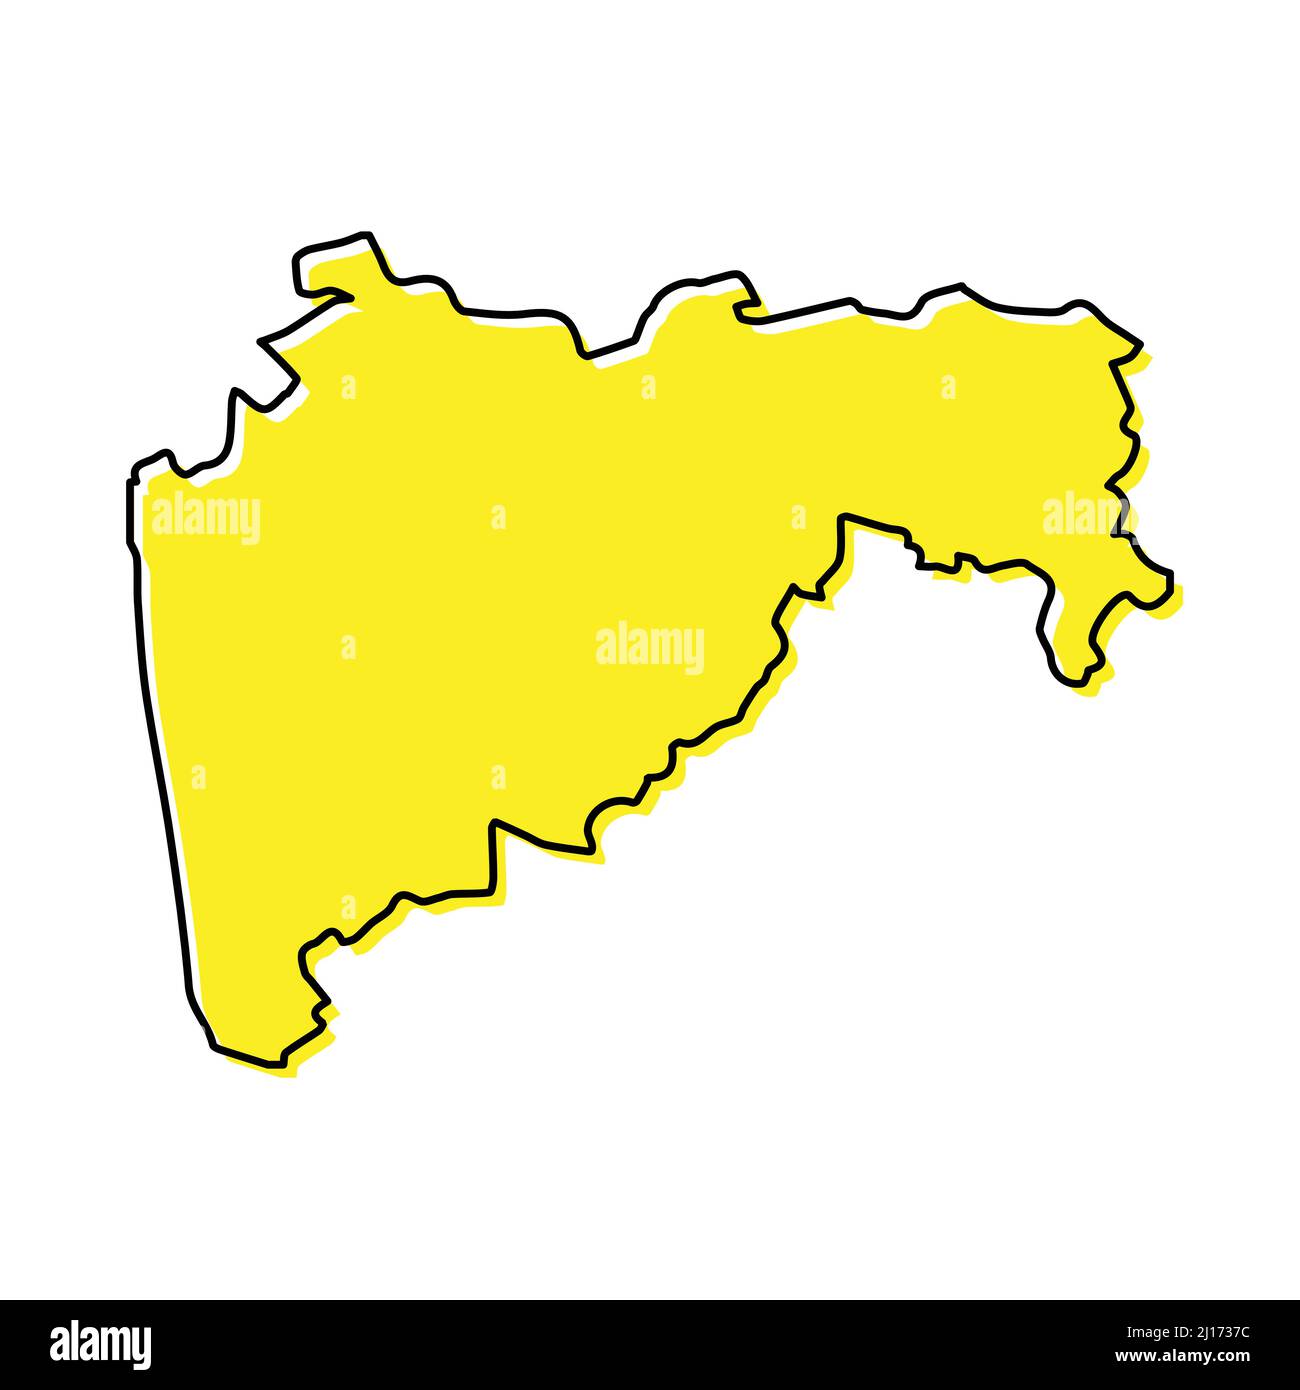 Maharashtra Map, Maharashtra State Map